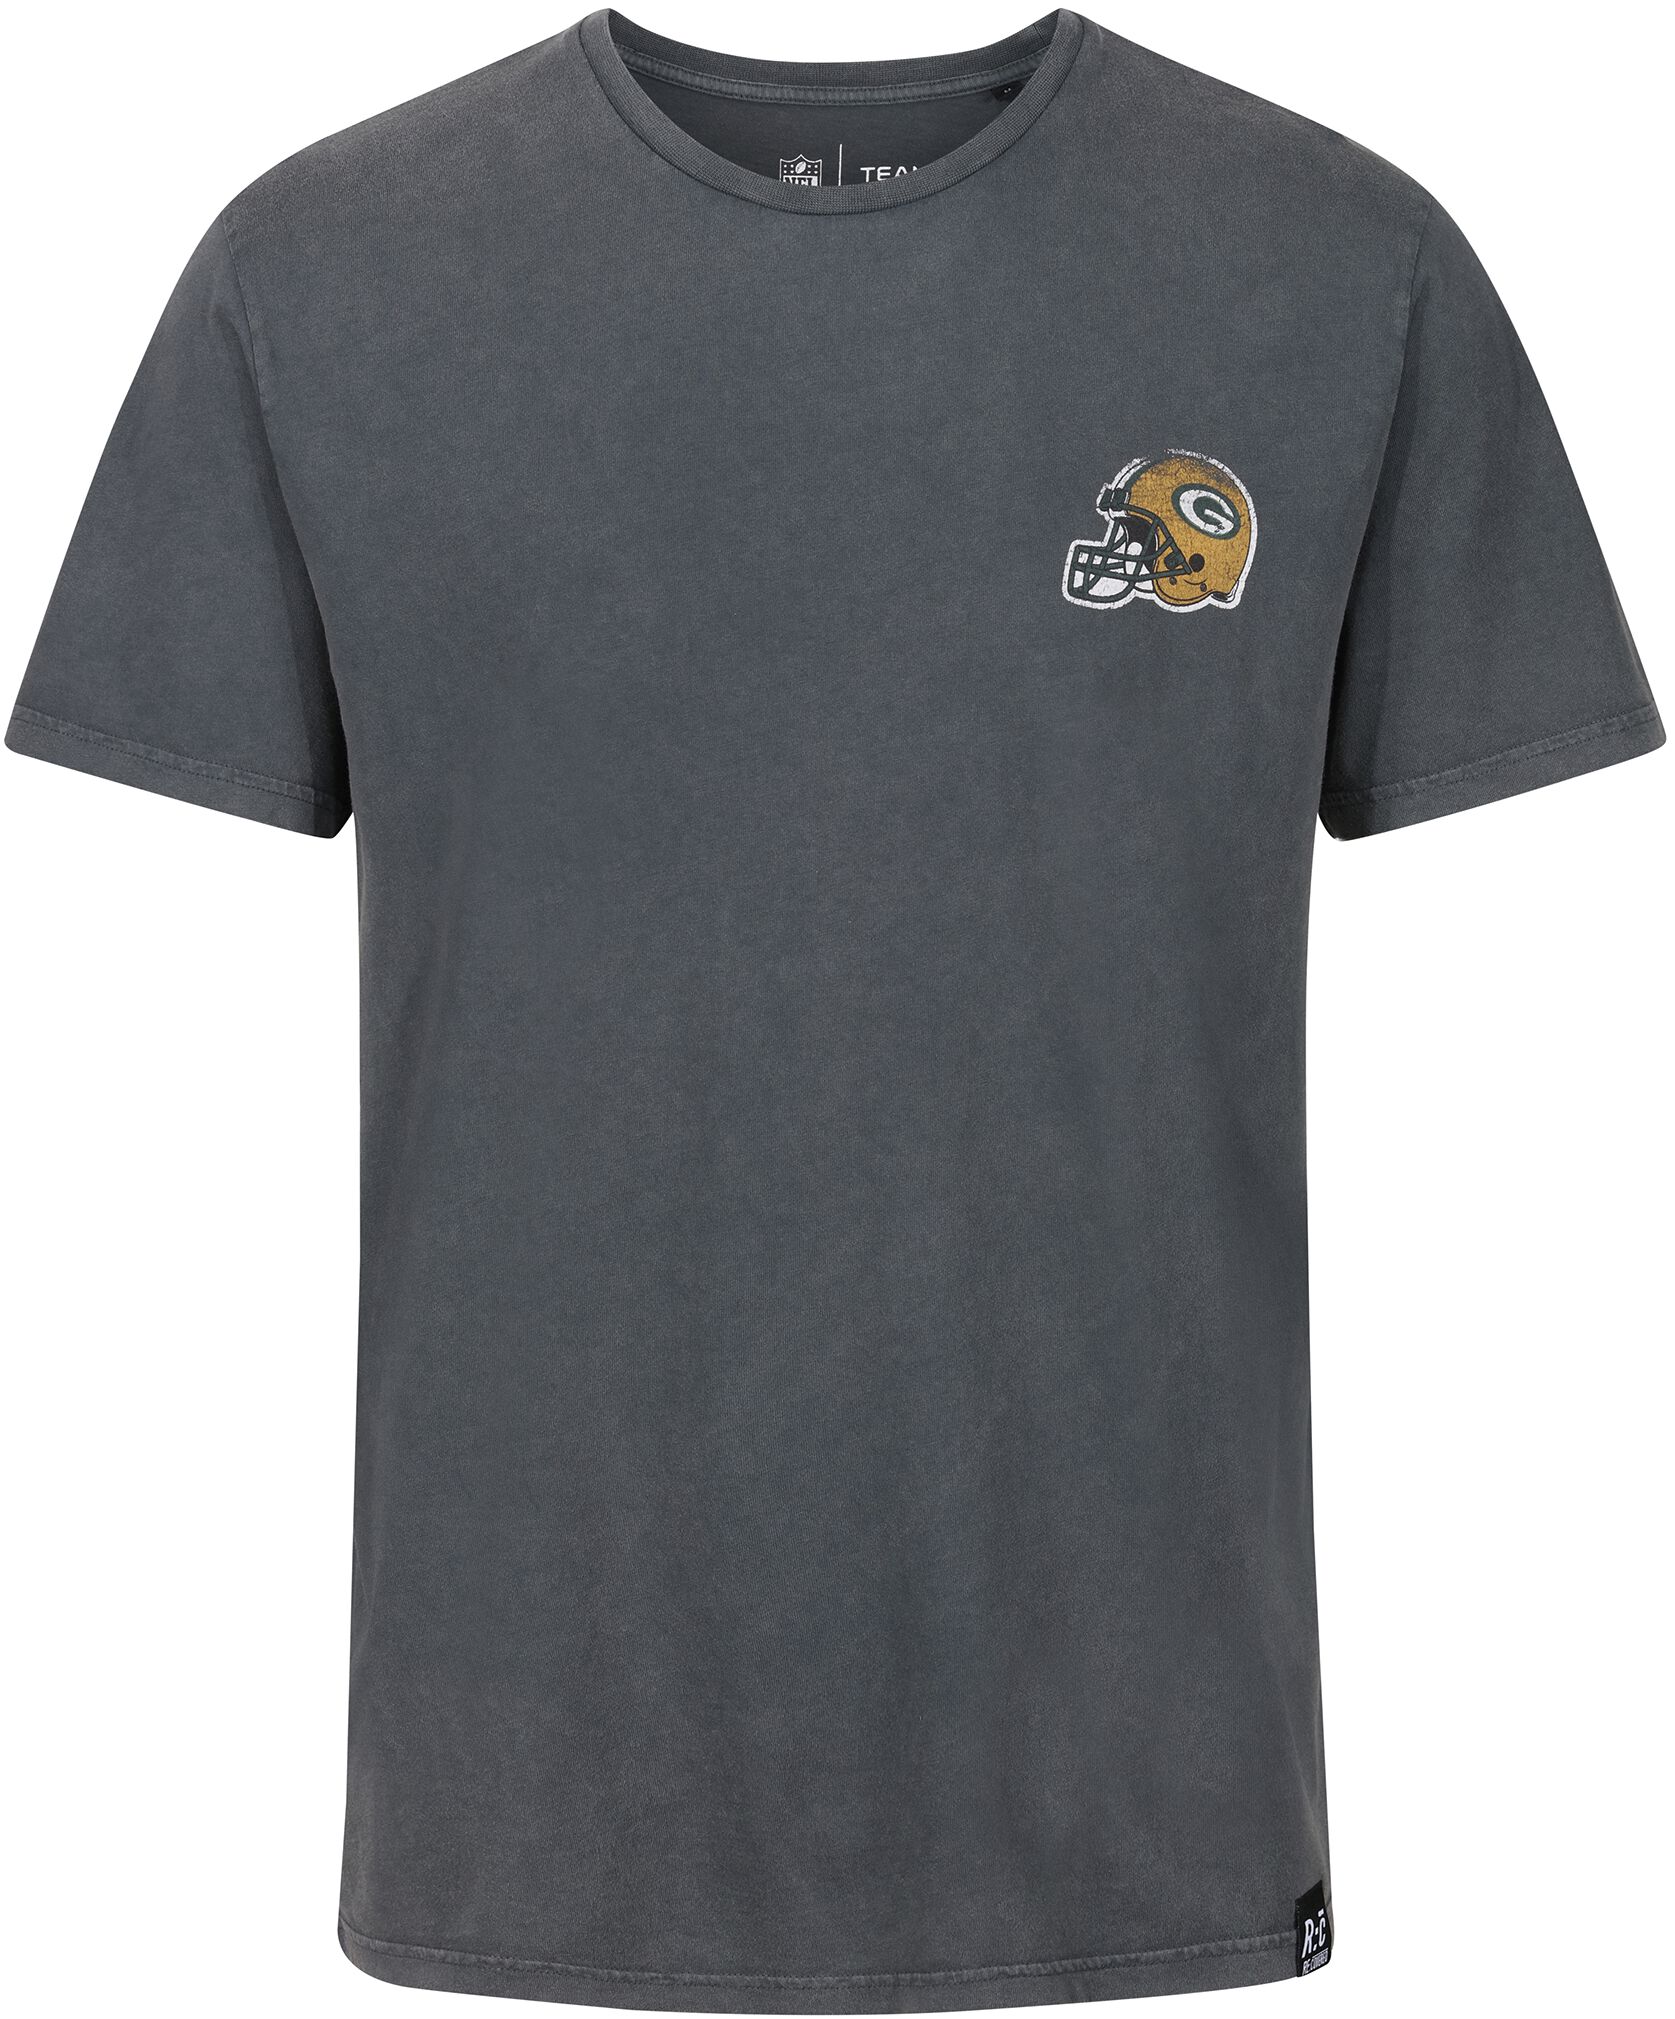 Recovered Clothing T-Shirt - NFL Packers College Black Washed - S bis XXL - für Männer - Größe M - multicolor